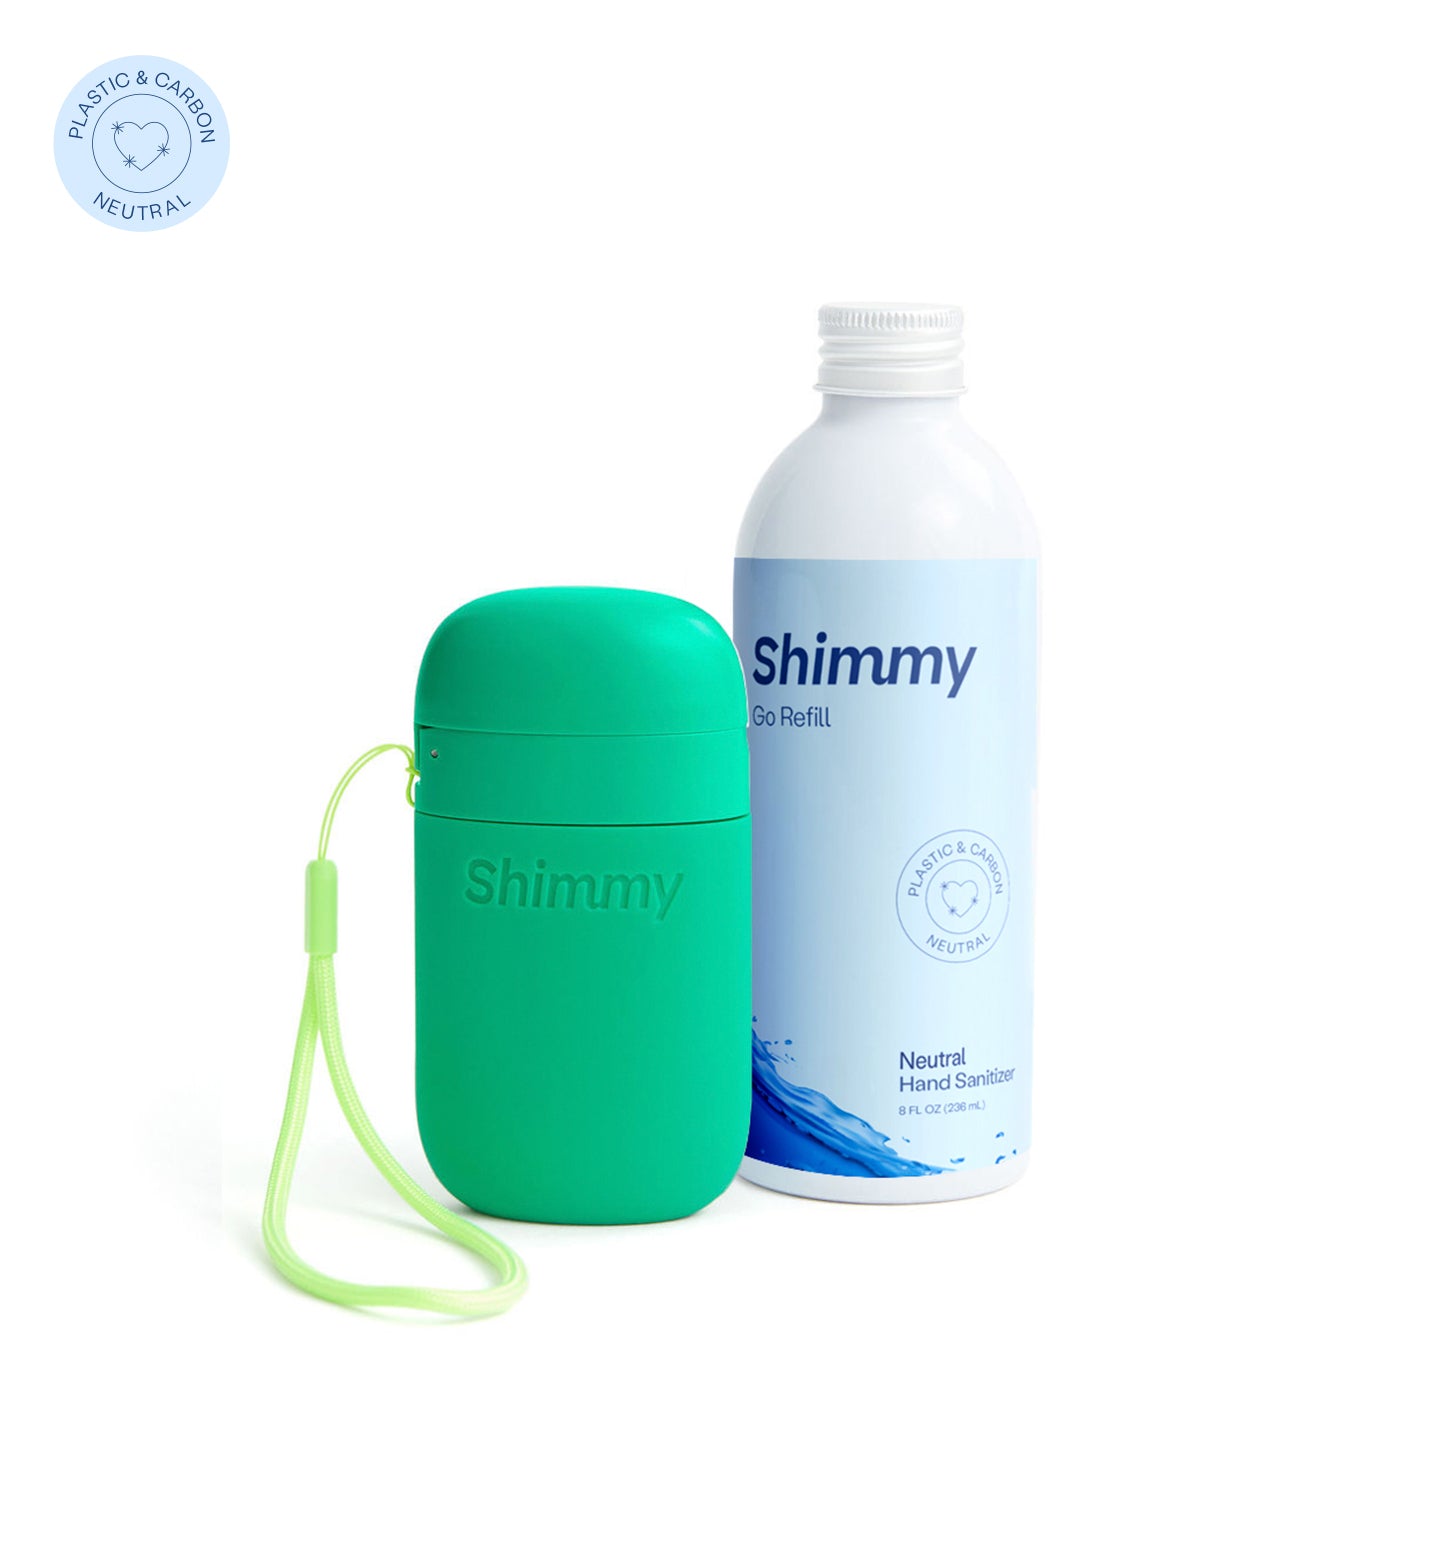 Shimmy Go Portable Hand Sanitizer Dispenser Kelly Green + Neutral Hand Sanitizer [41594059555007] - 41594059555007